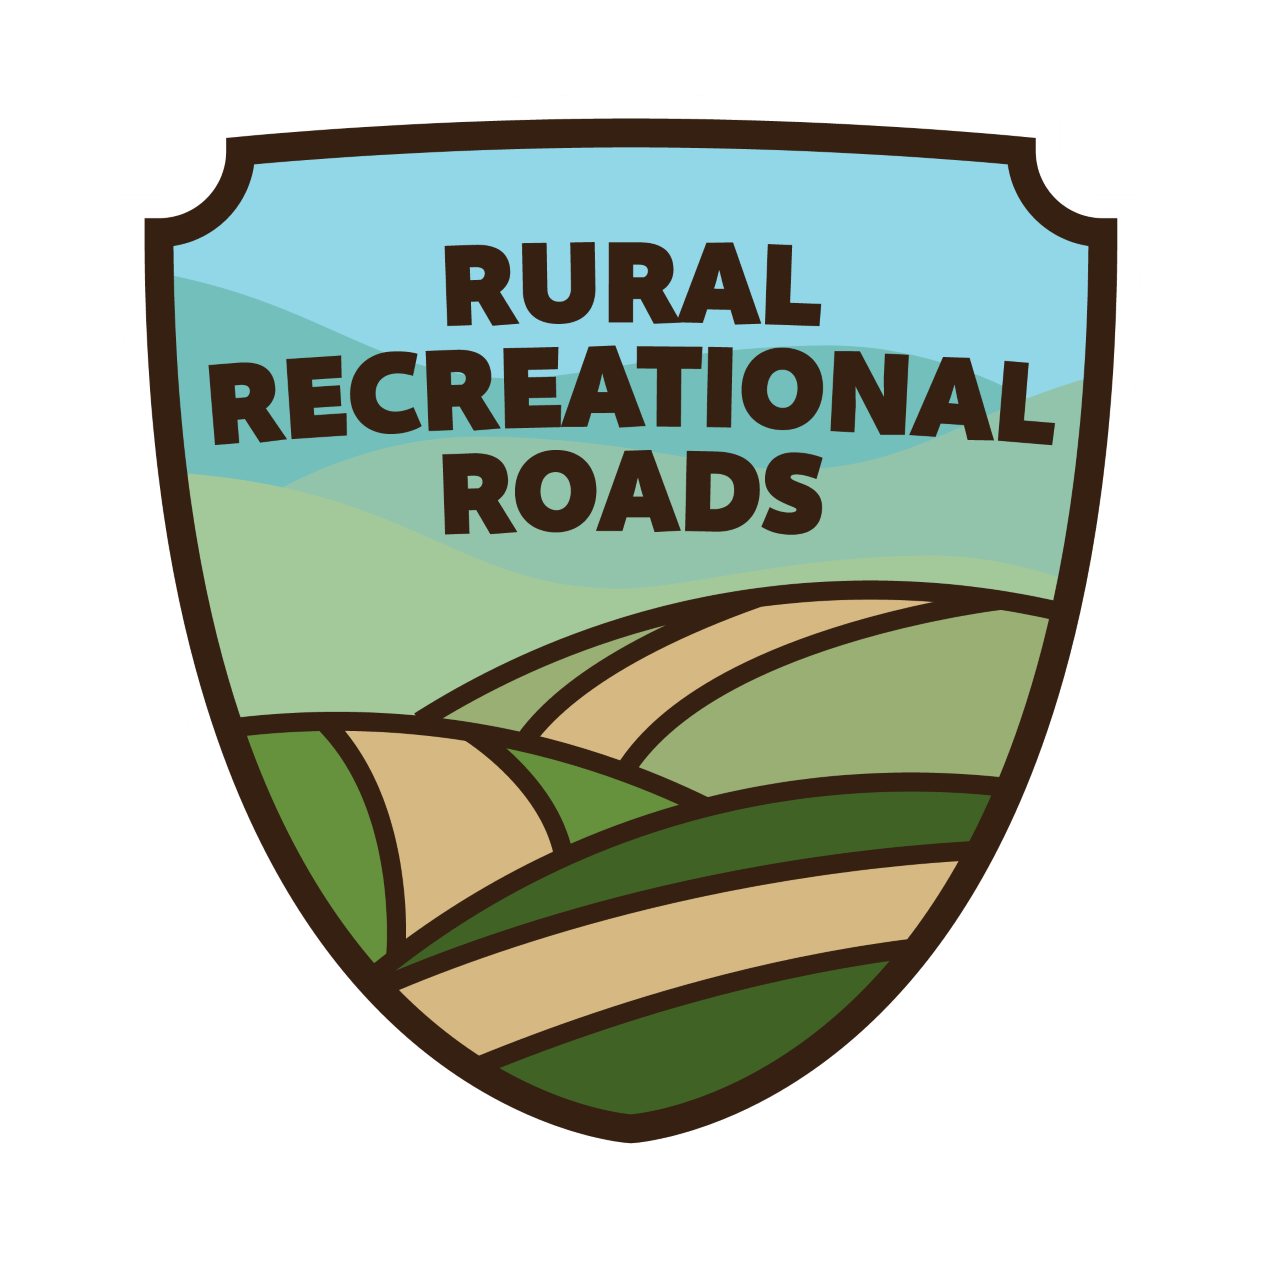 Rural Recreational Roads